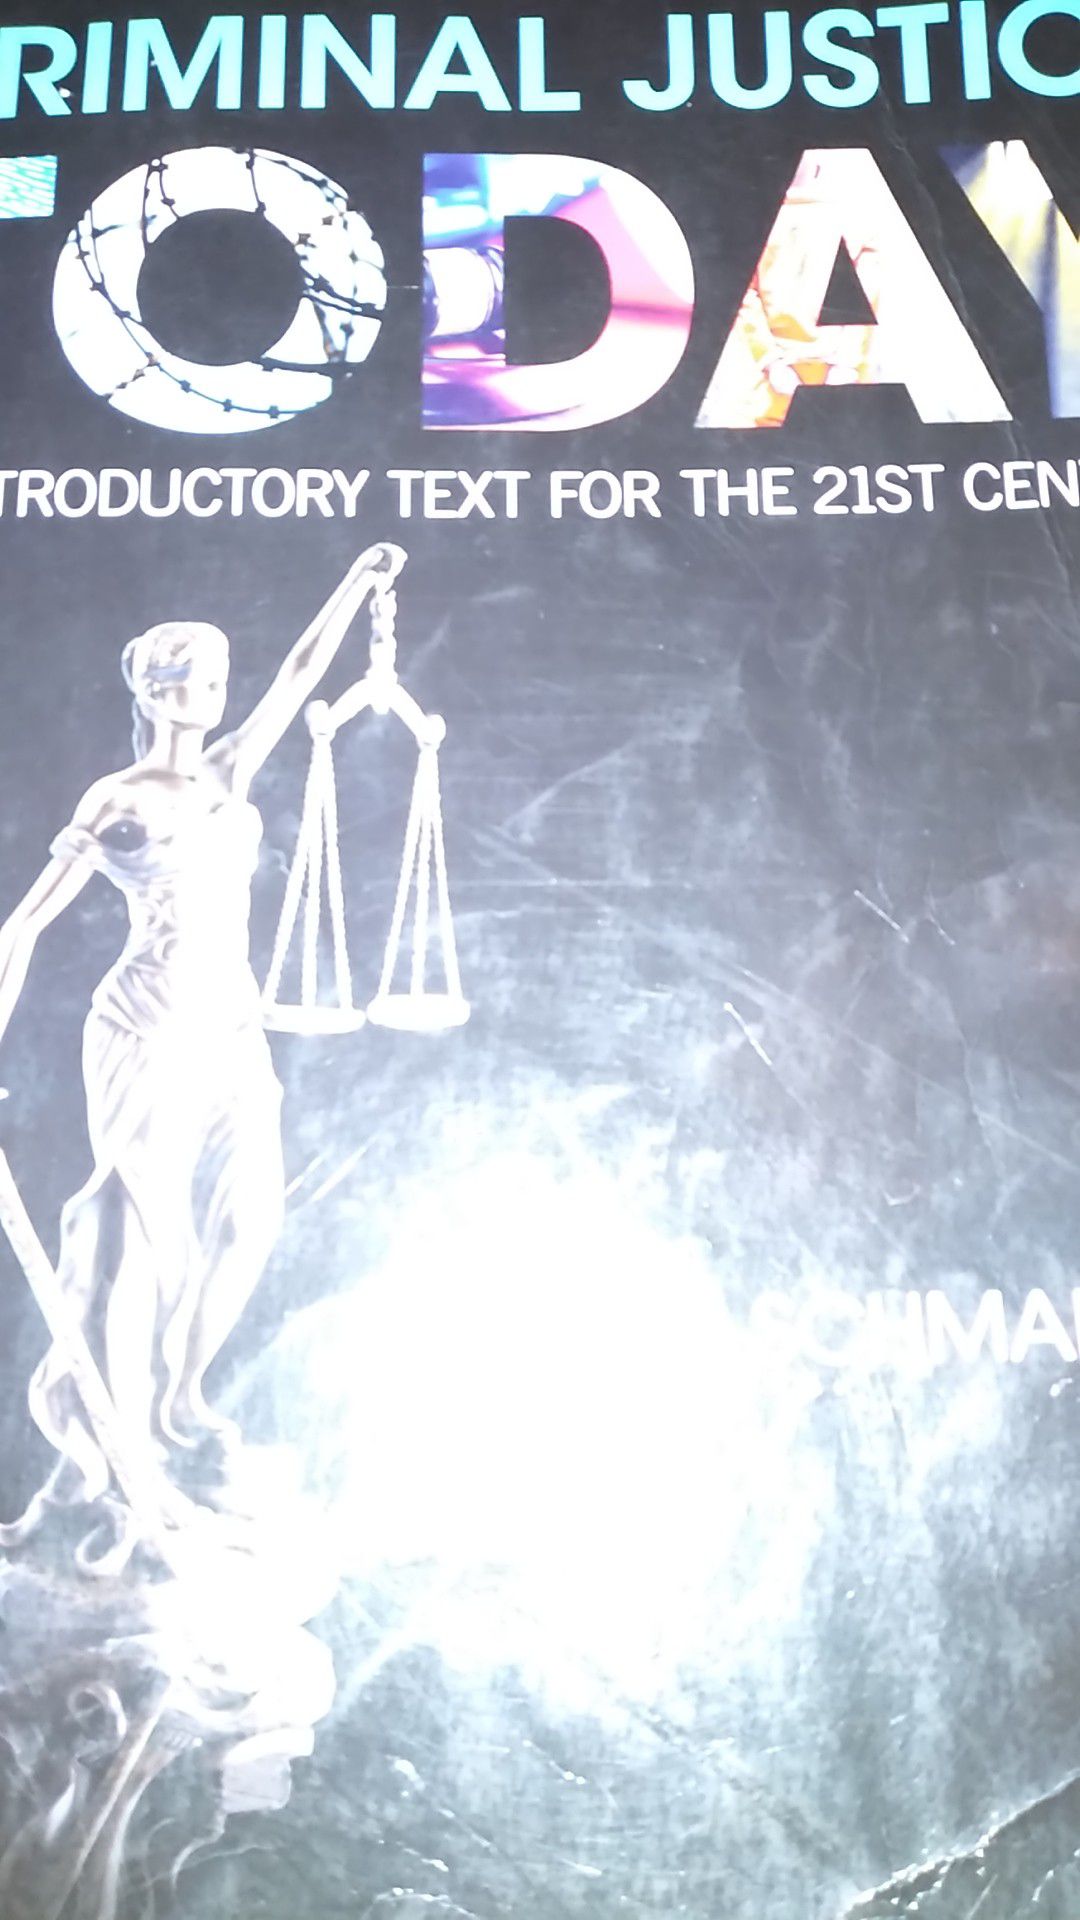 Criminal justice today text book